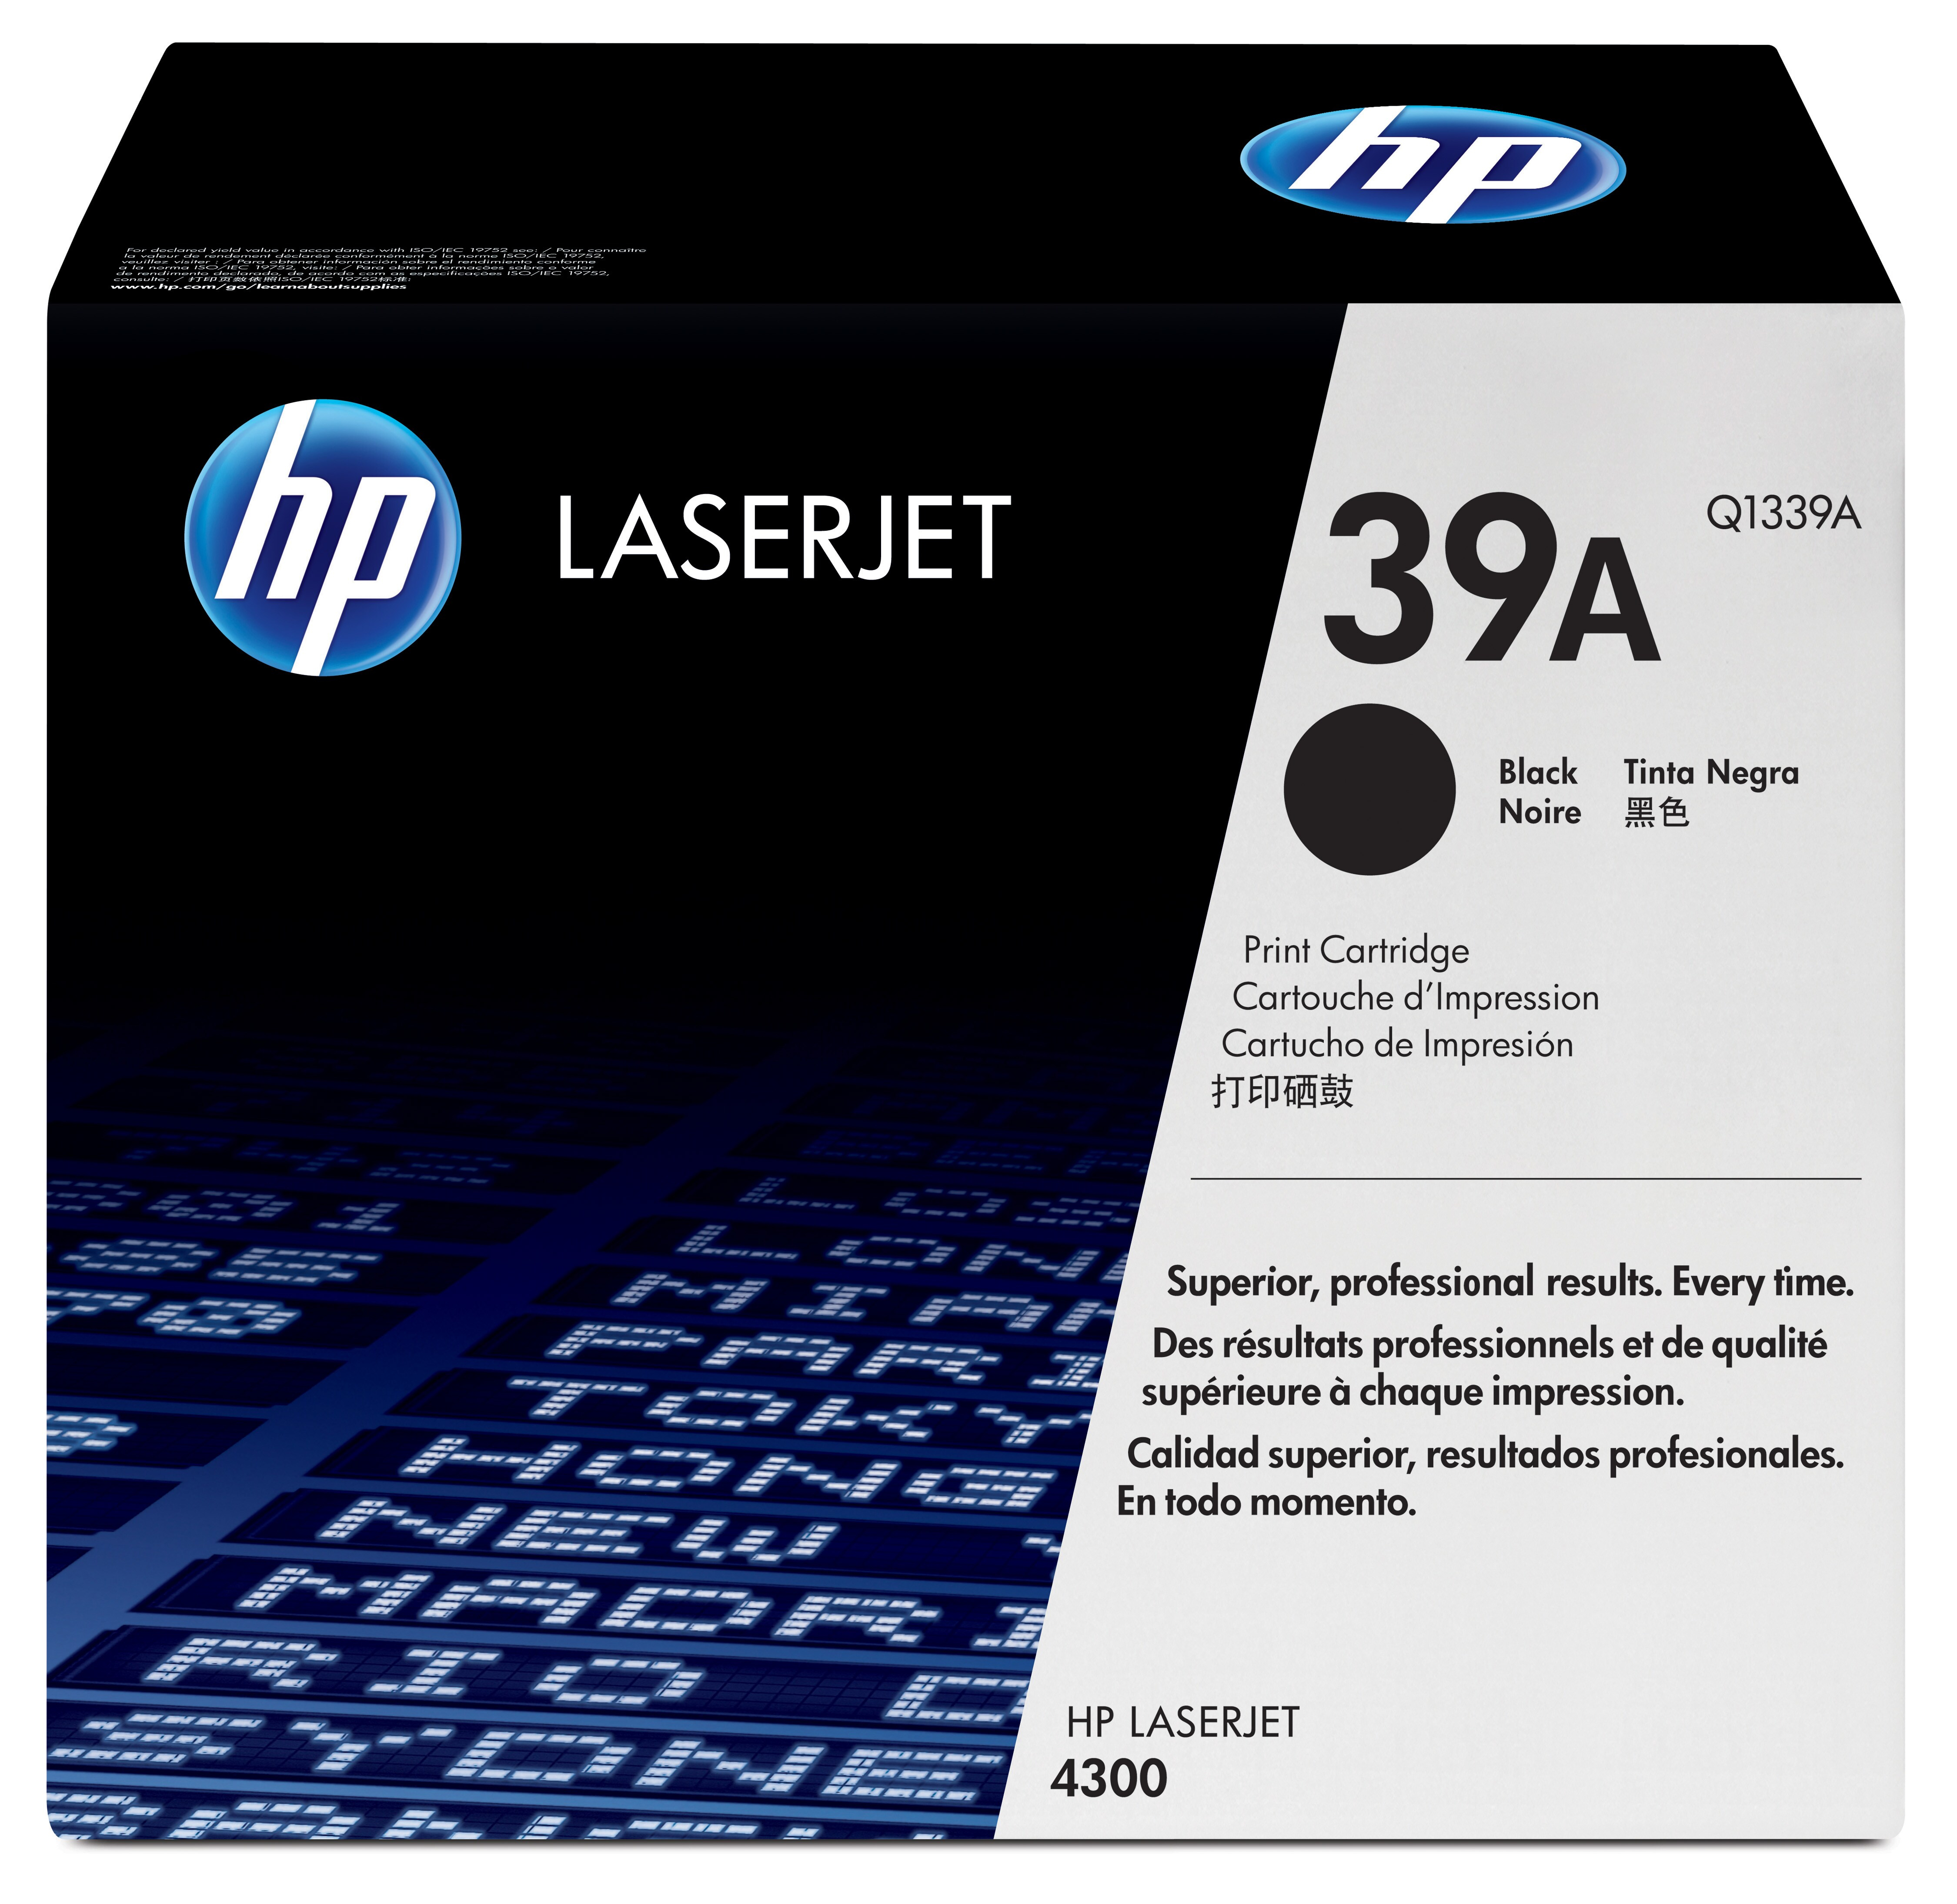 Toner Para Impresora Laser Negro Hp Q1339A 39A 18000 Paginas